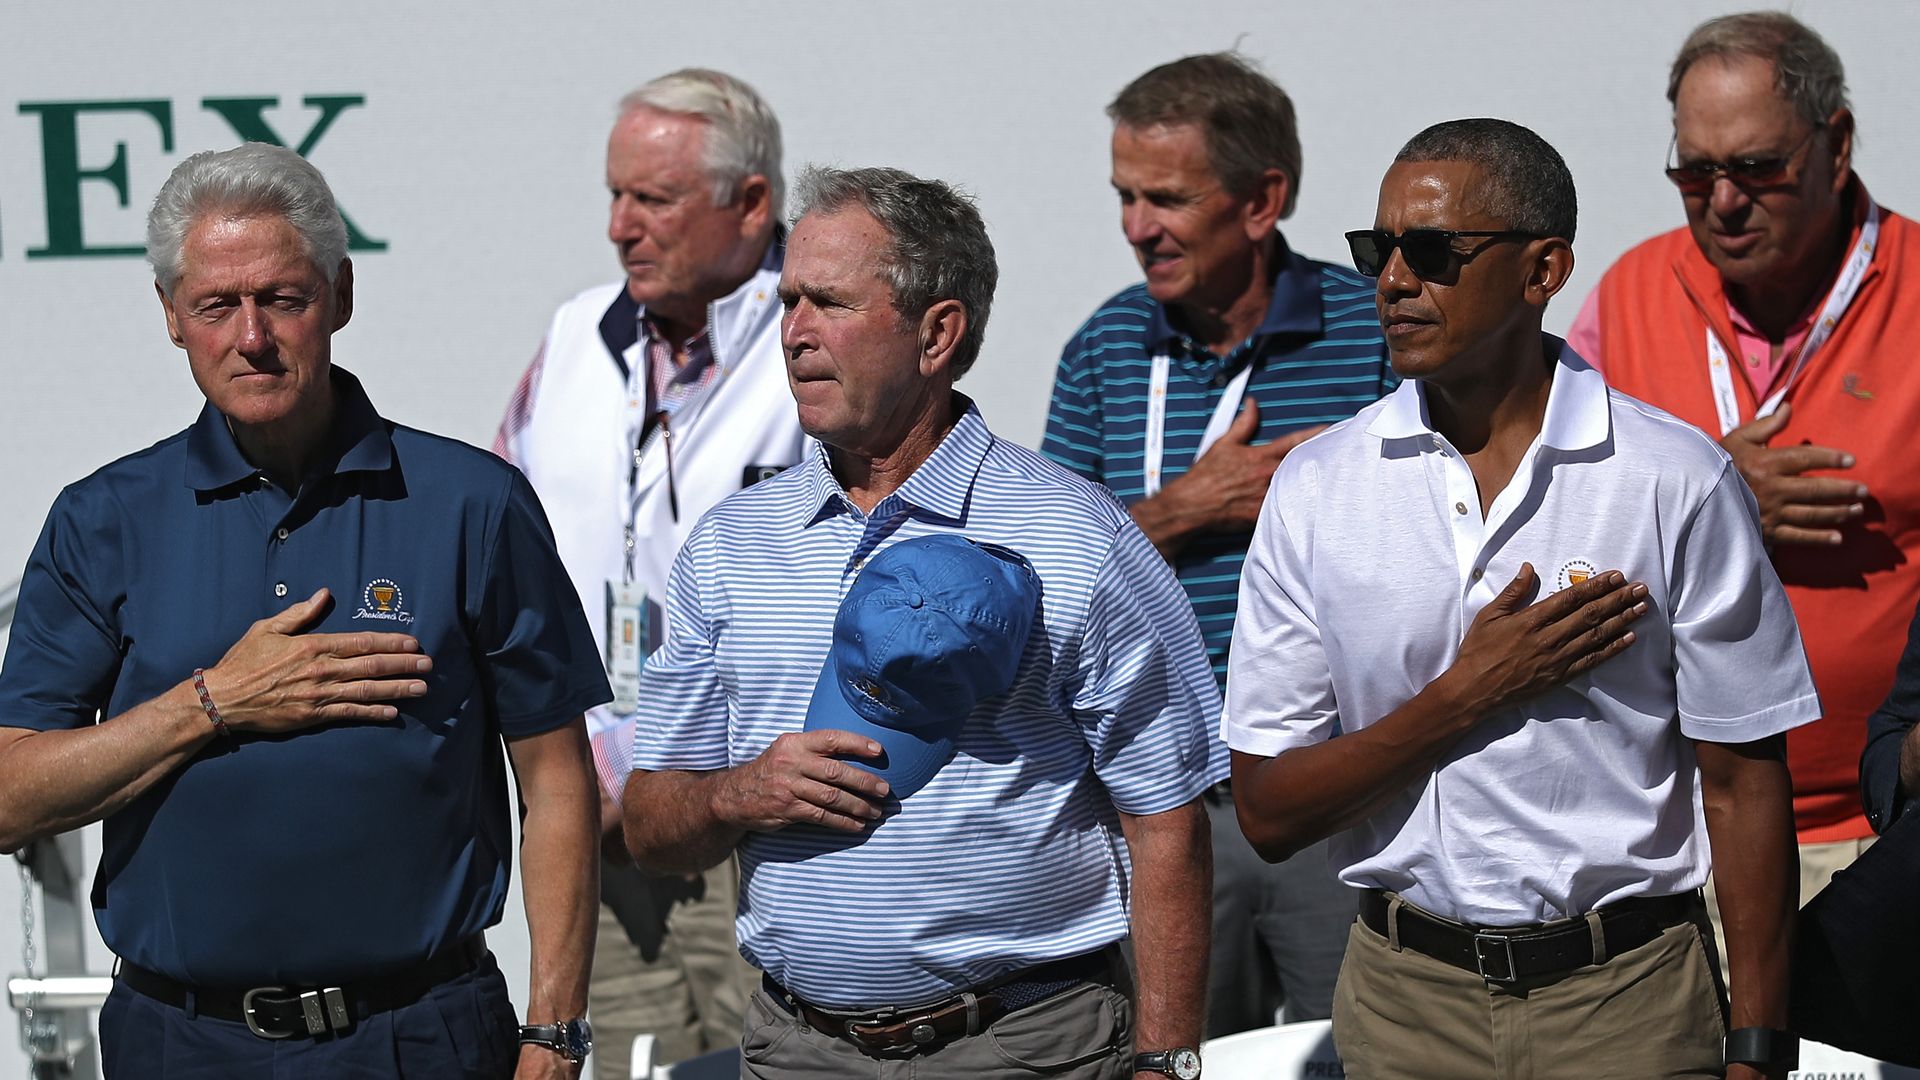 Presidents Clinton, George W. Bush and Obama